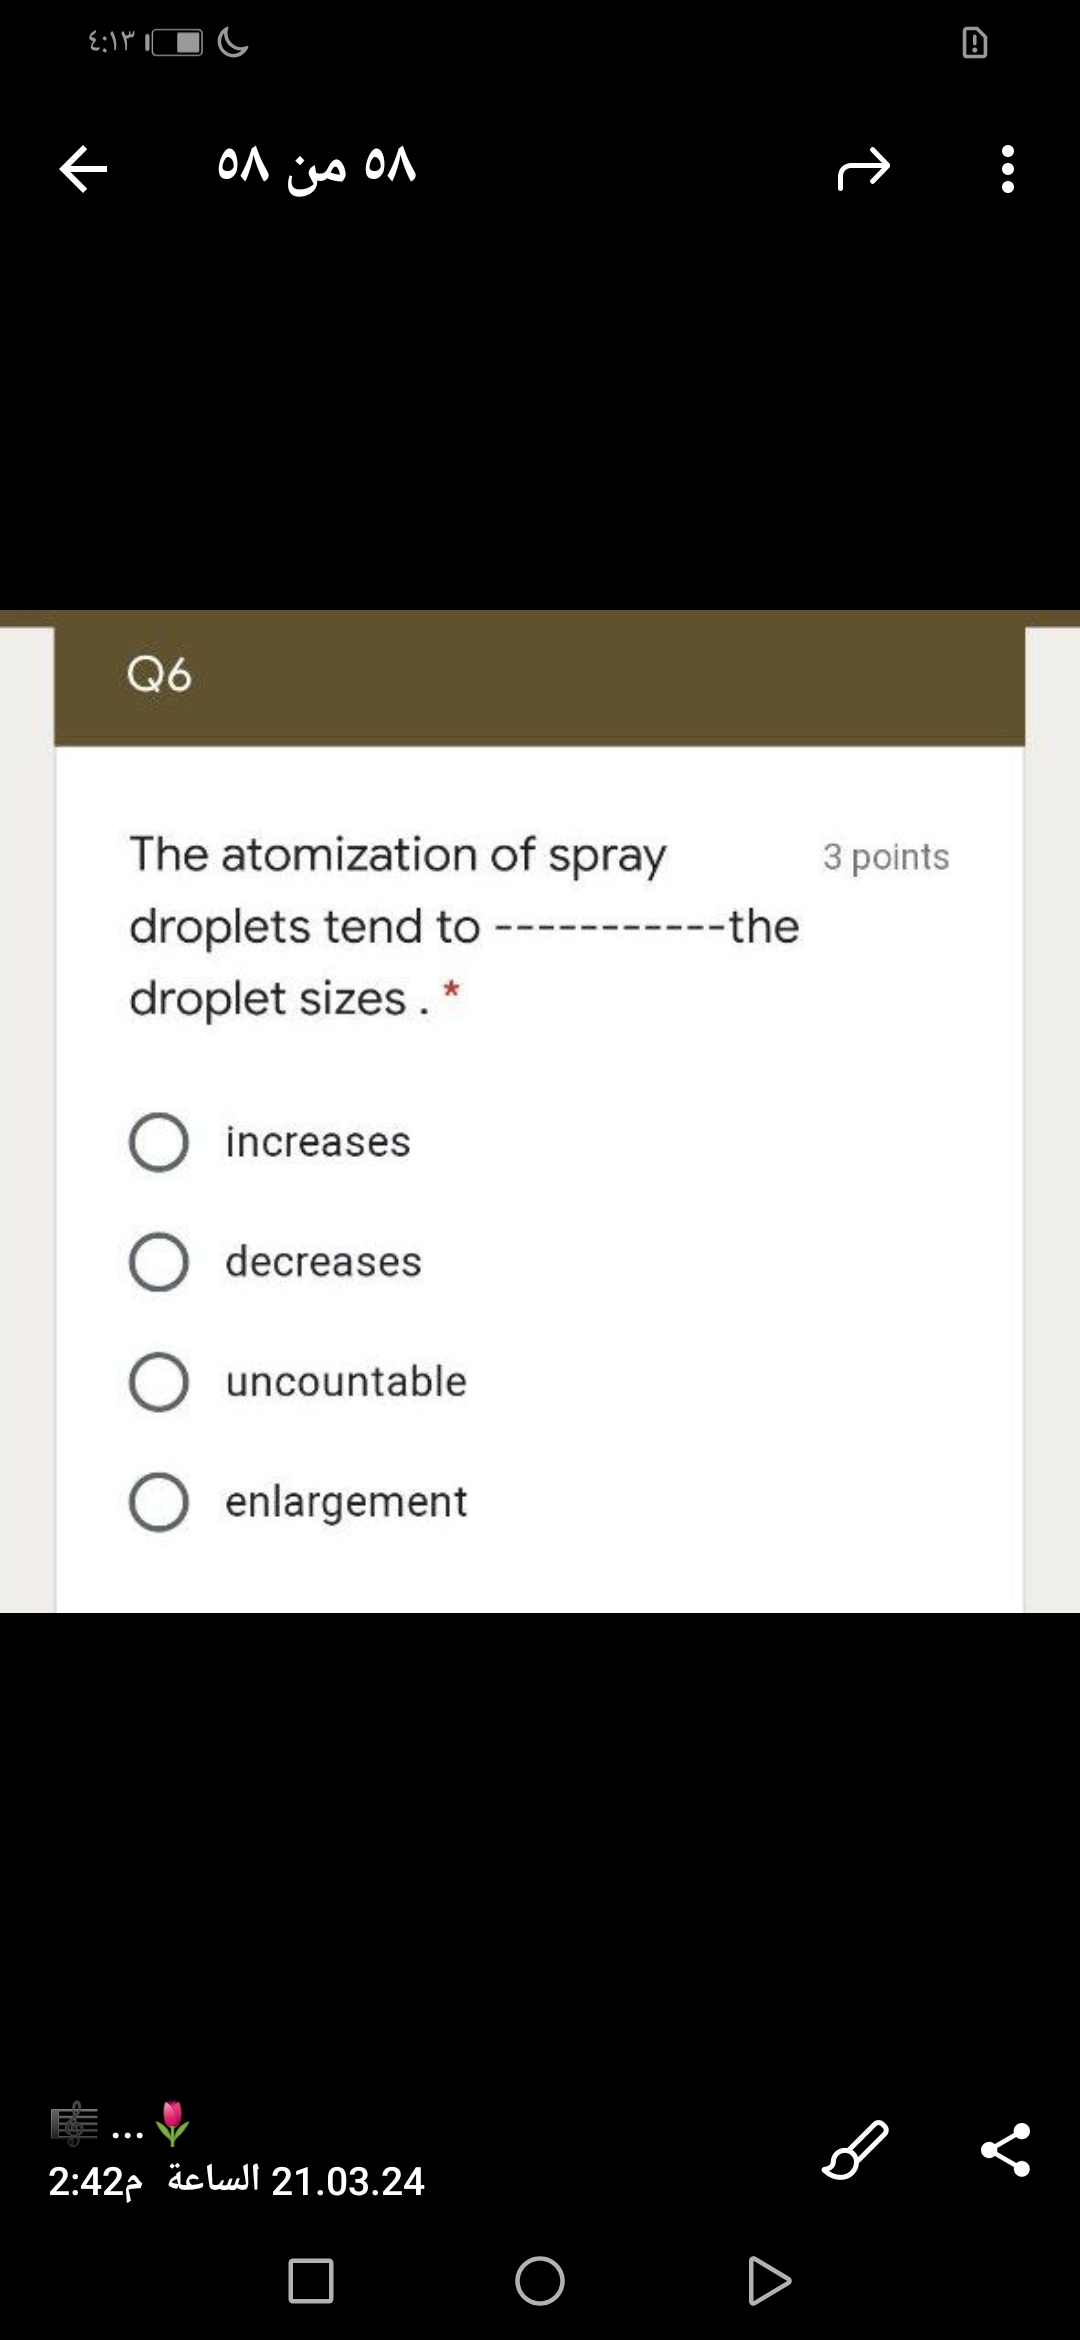 58 من ٥٨
ON
Q6
The atomization of spray
3 points
droplets tend to
----the
droplet sizes. *
O increases
O decreases
uncountable
O enlargement
2:422 äclull 21.03.24
D
